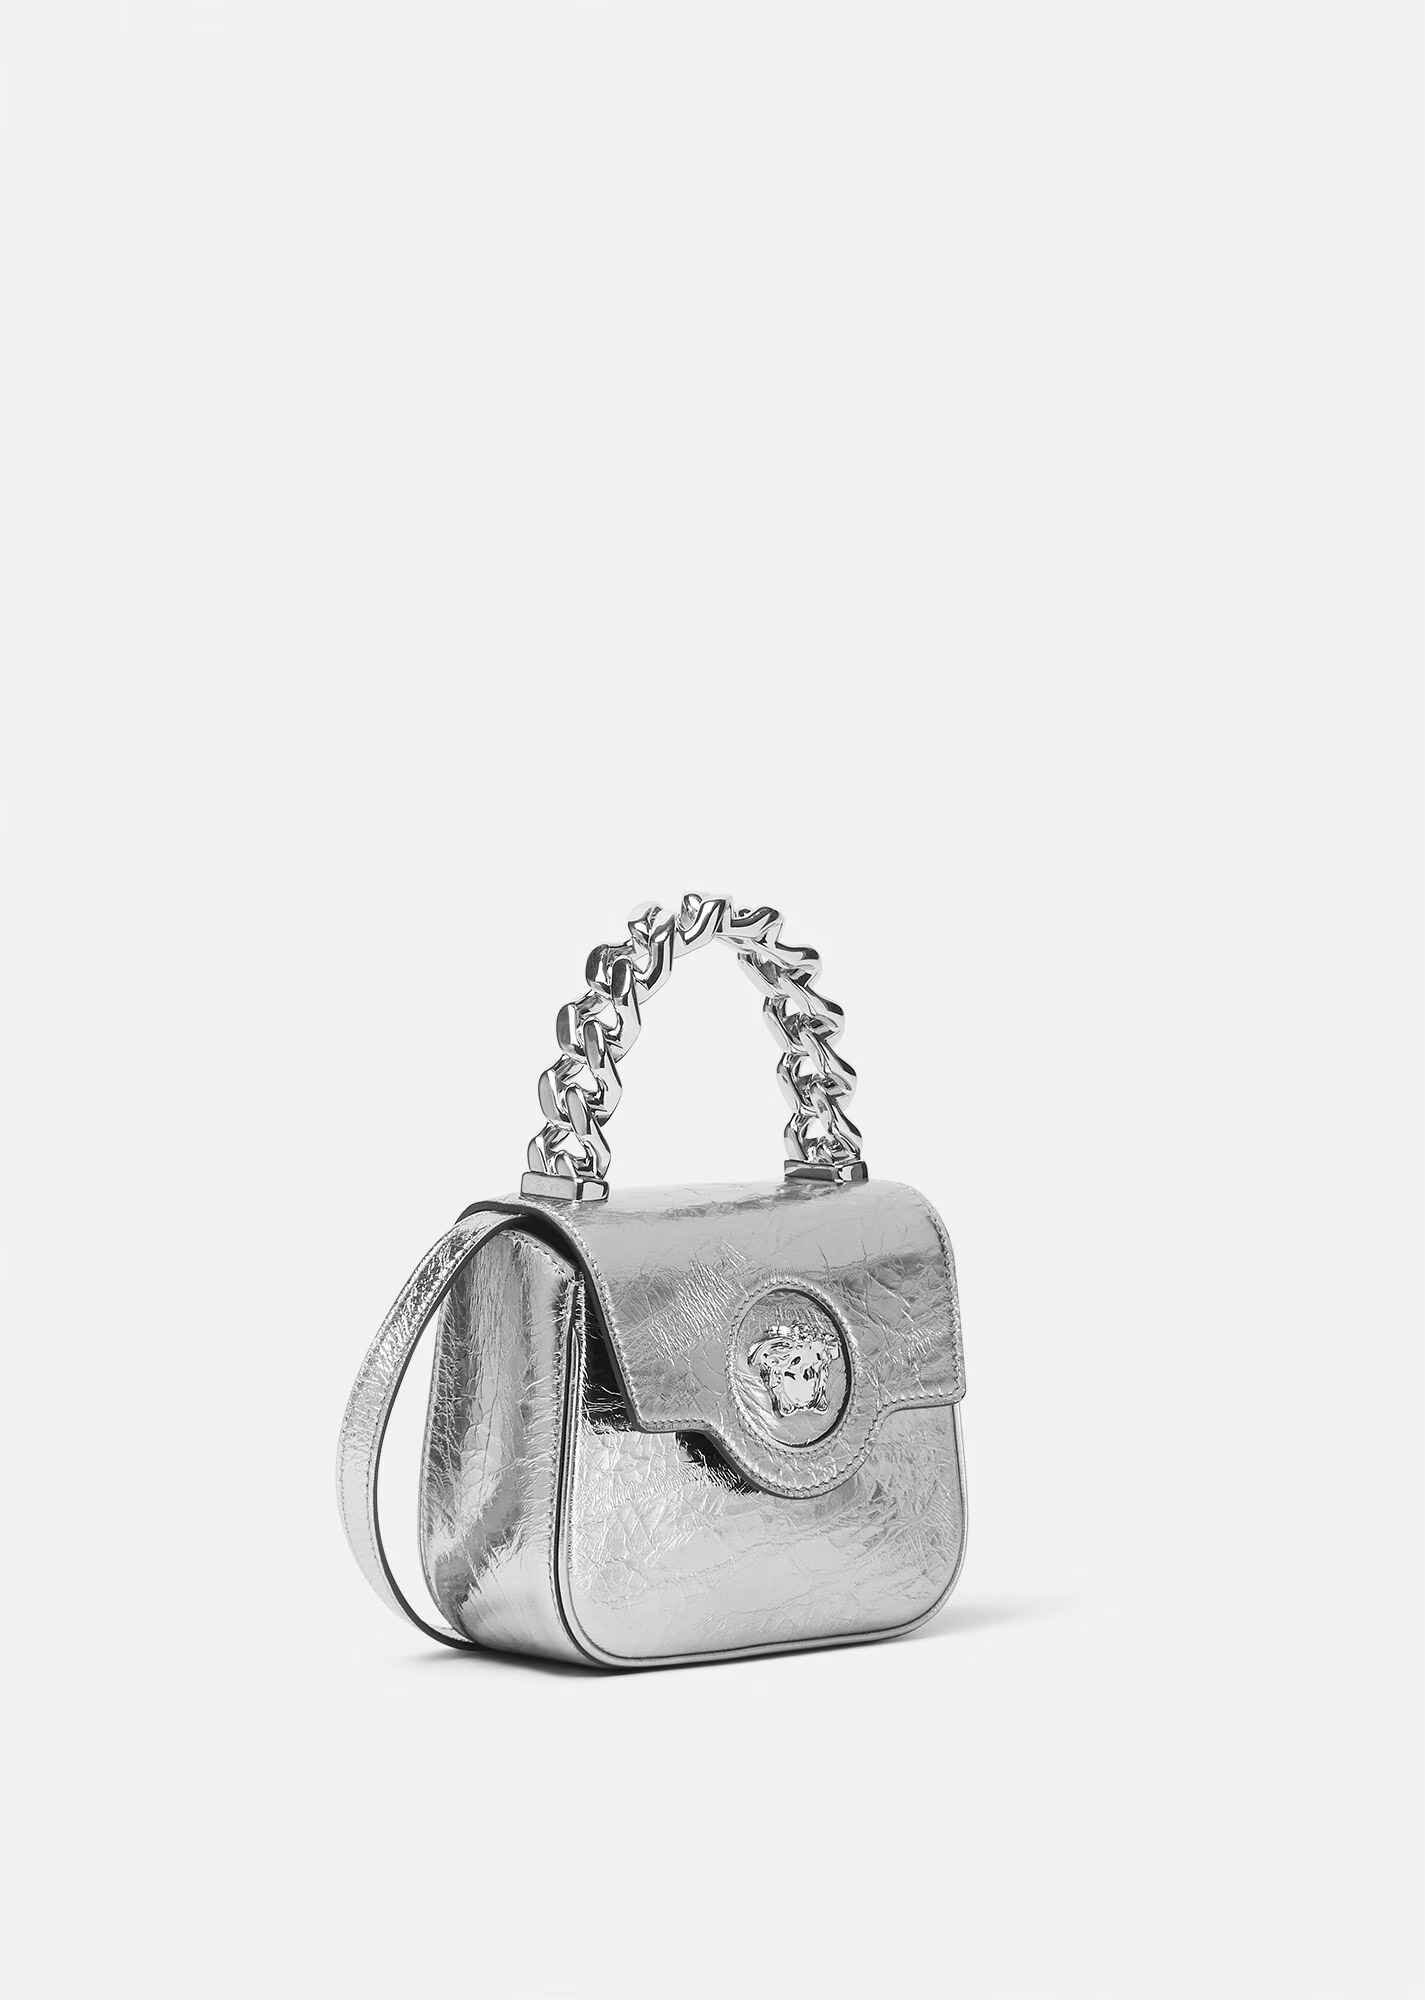 A bag women's silver La Medusa 16 cm фото 2